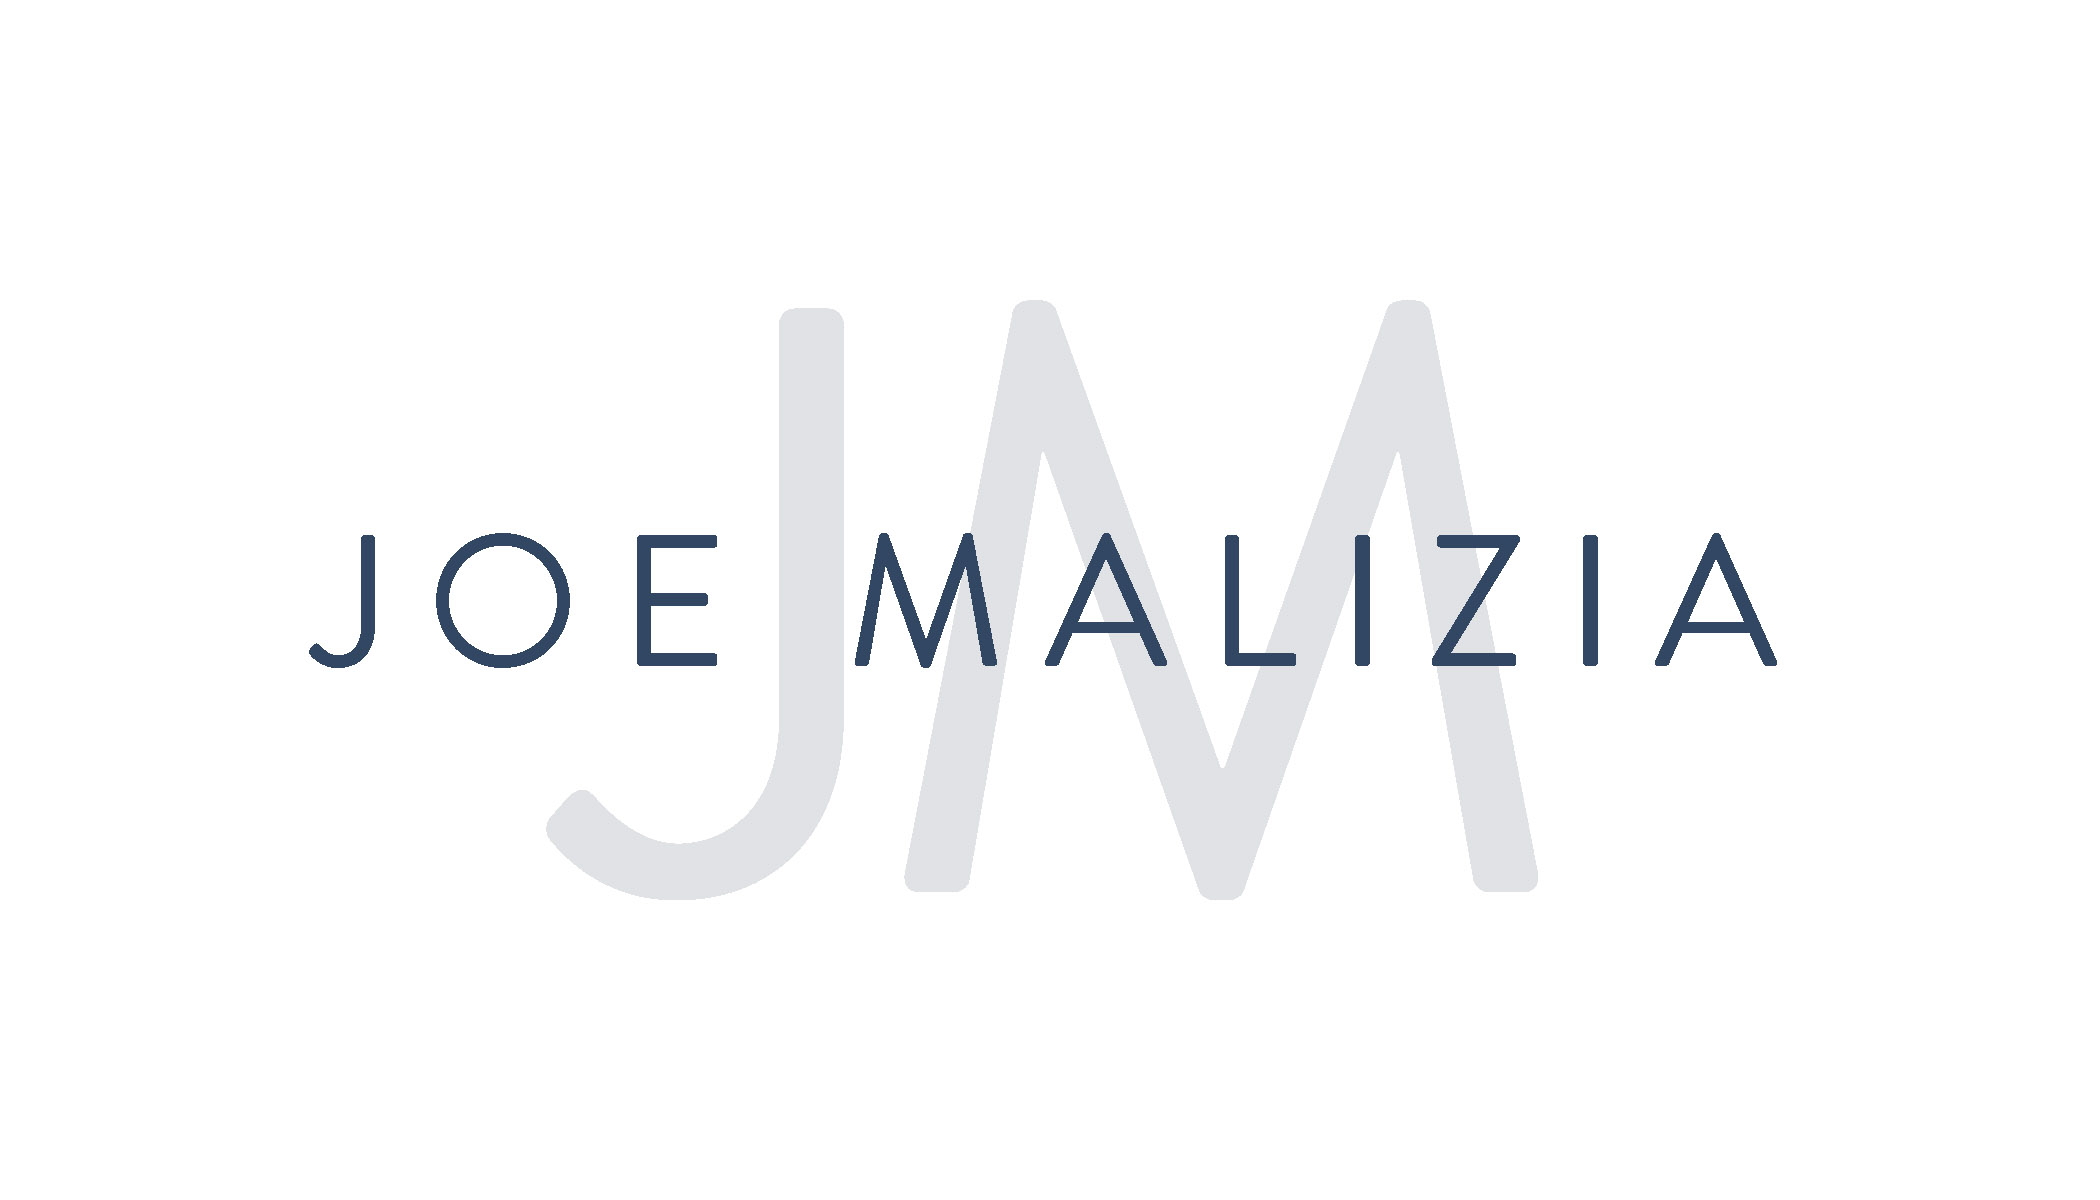 Joe Malizia